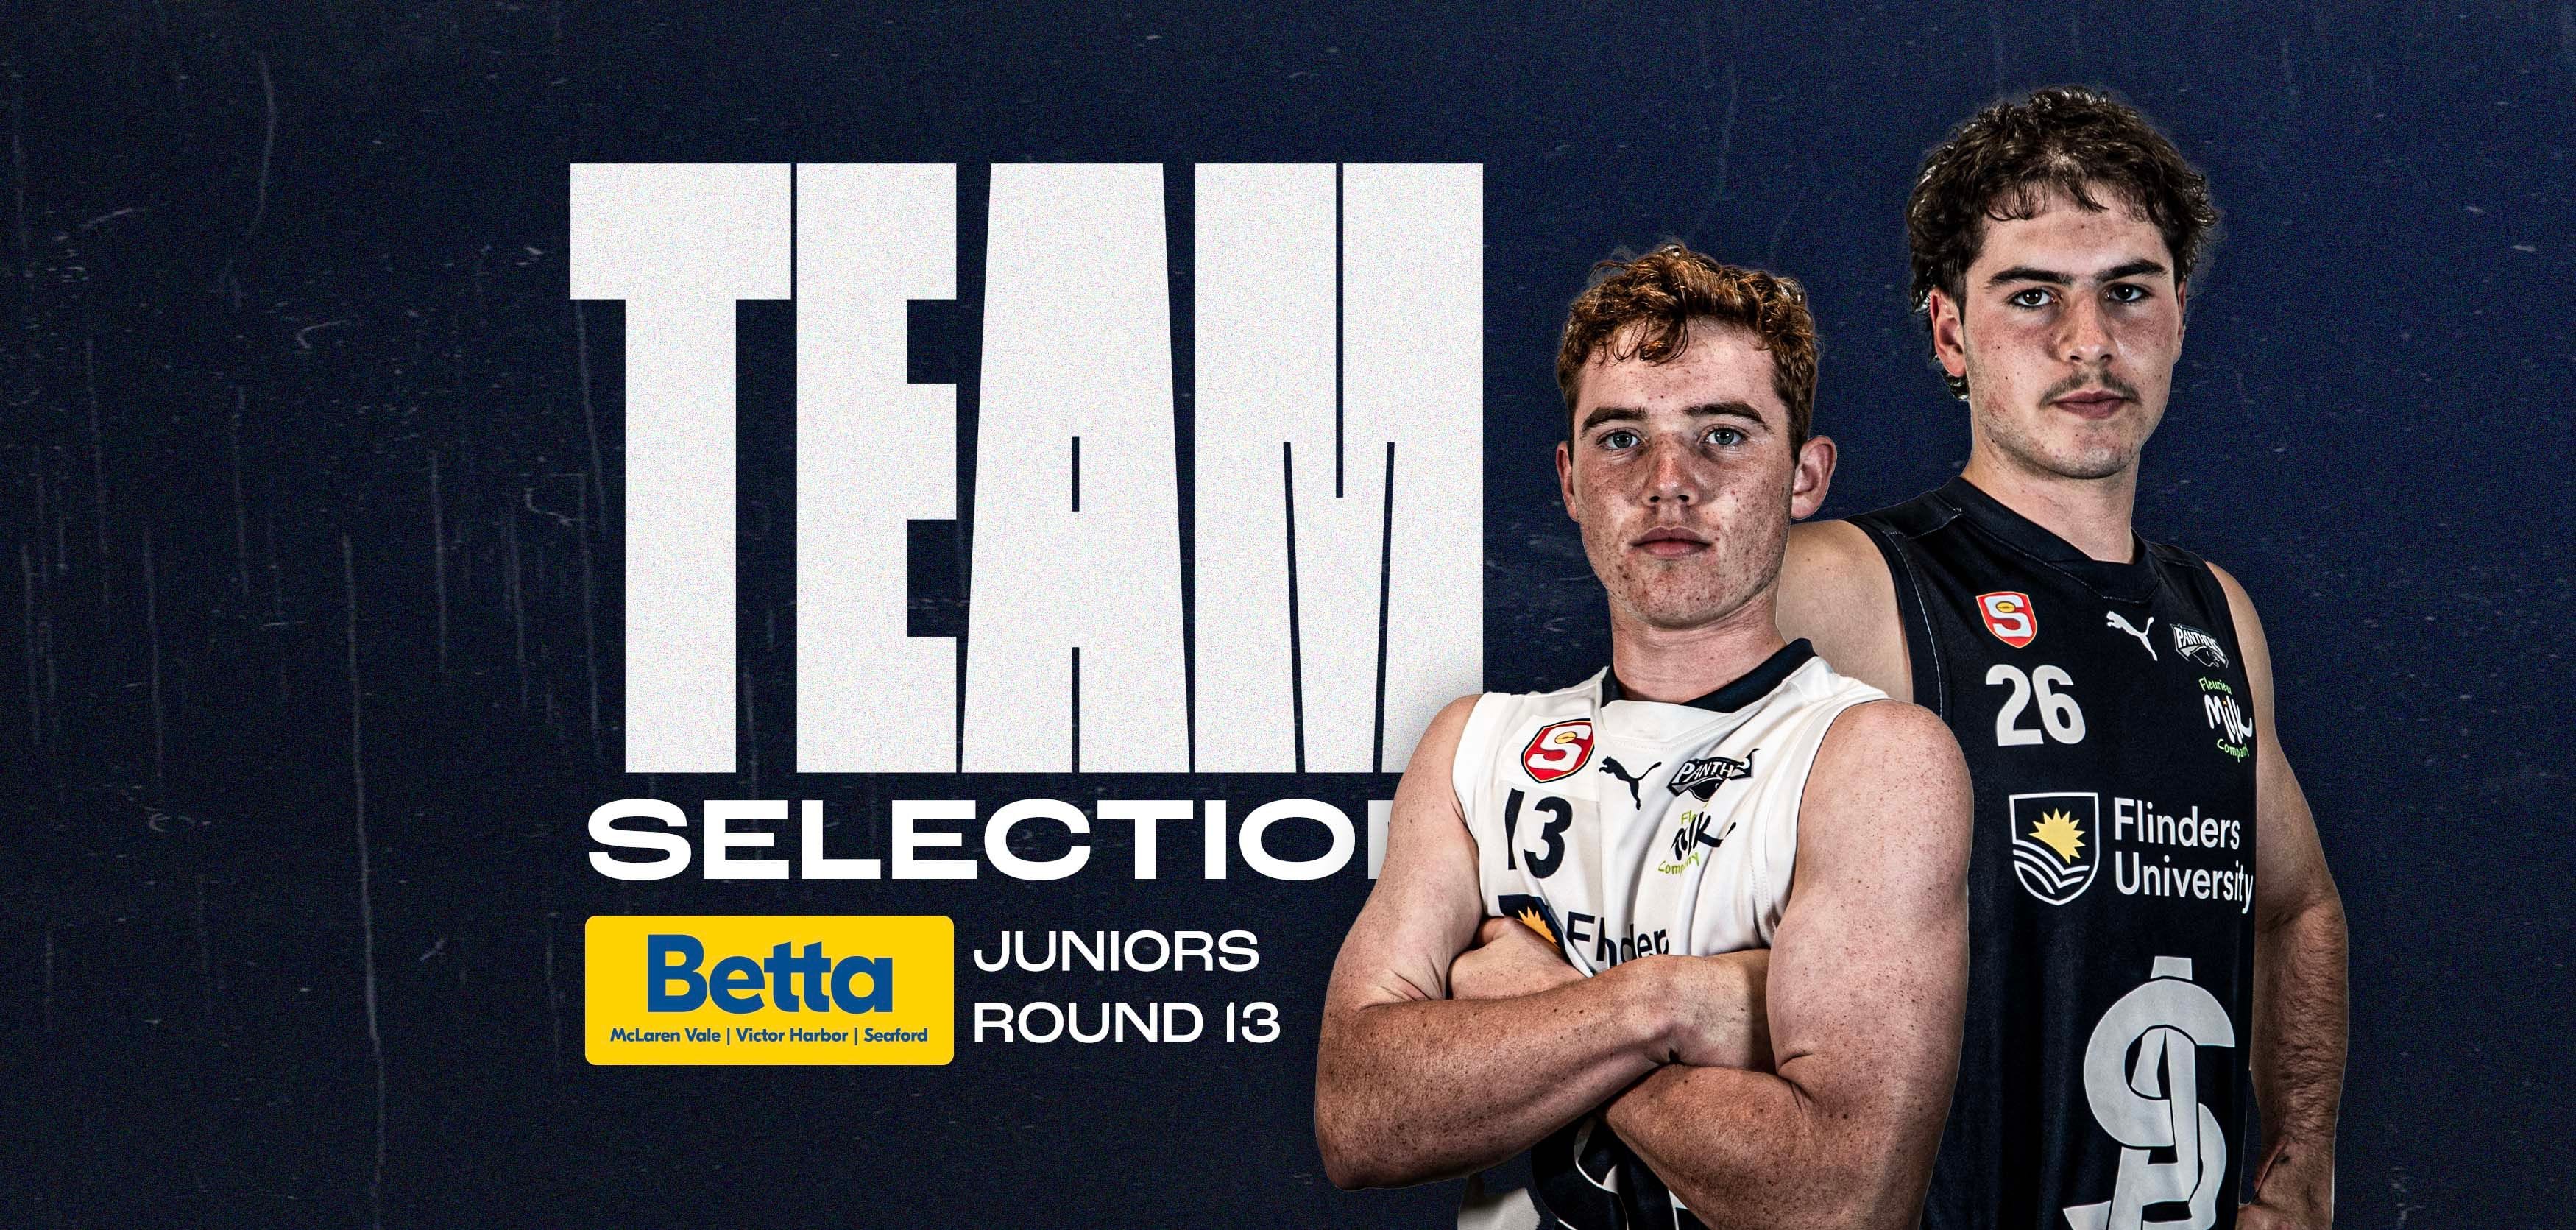 BETTA Team Selection: Juniors Round 13 v Sturt